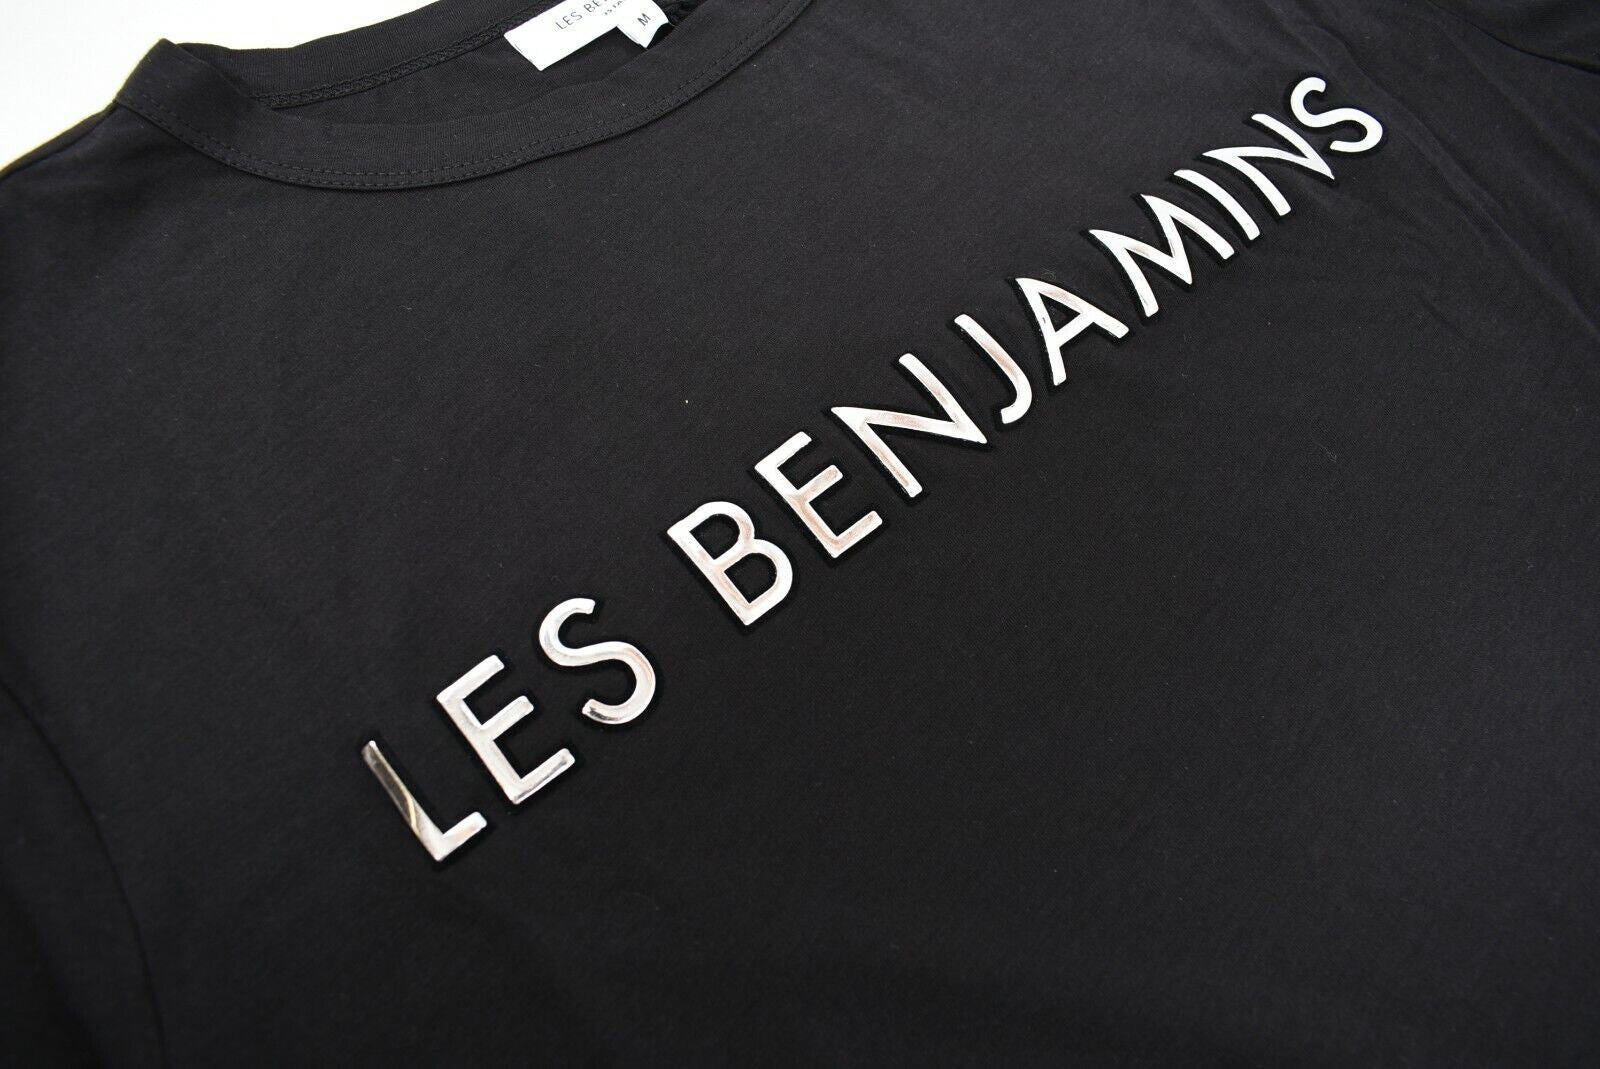 LES BENJAMINS Men's Black & Logo Cotton T-shirt, size M